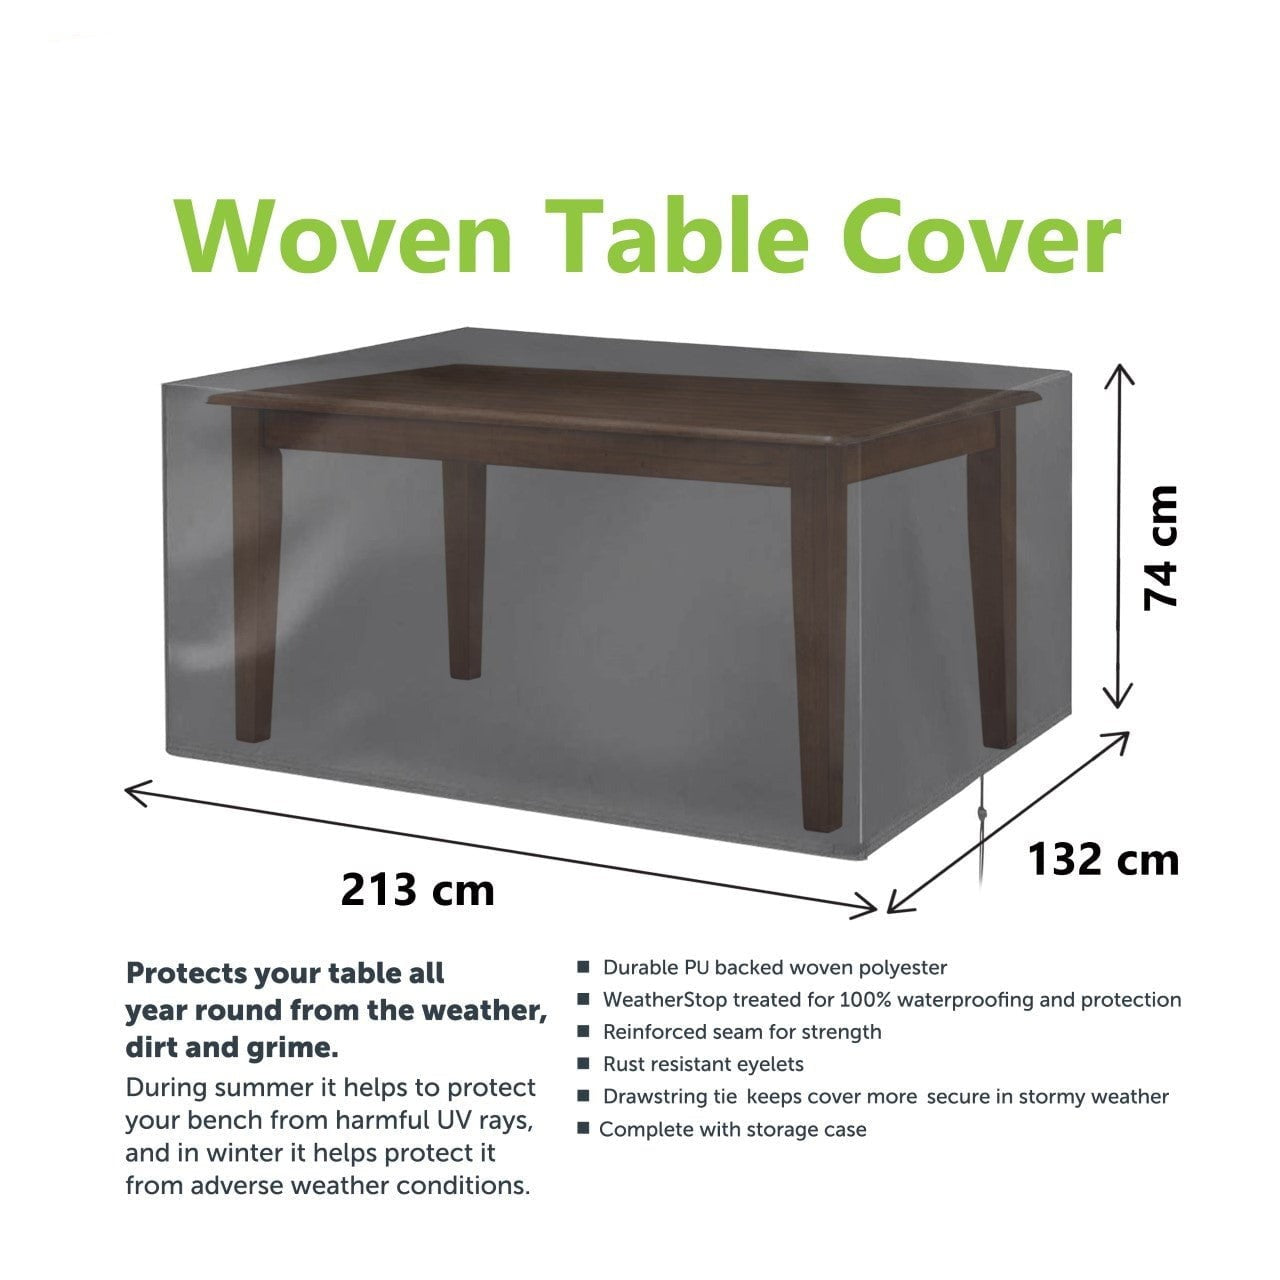 Garden Woven Table Cover 213 x 132 x 74cm 3282 (Parcel Rate)